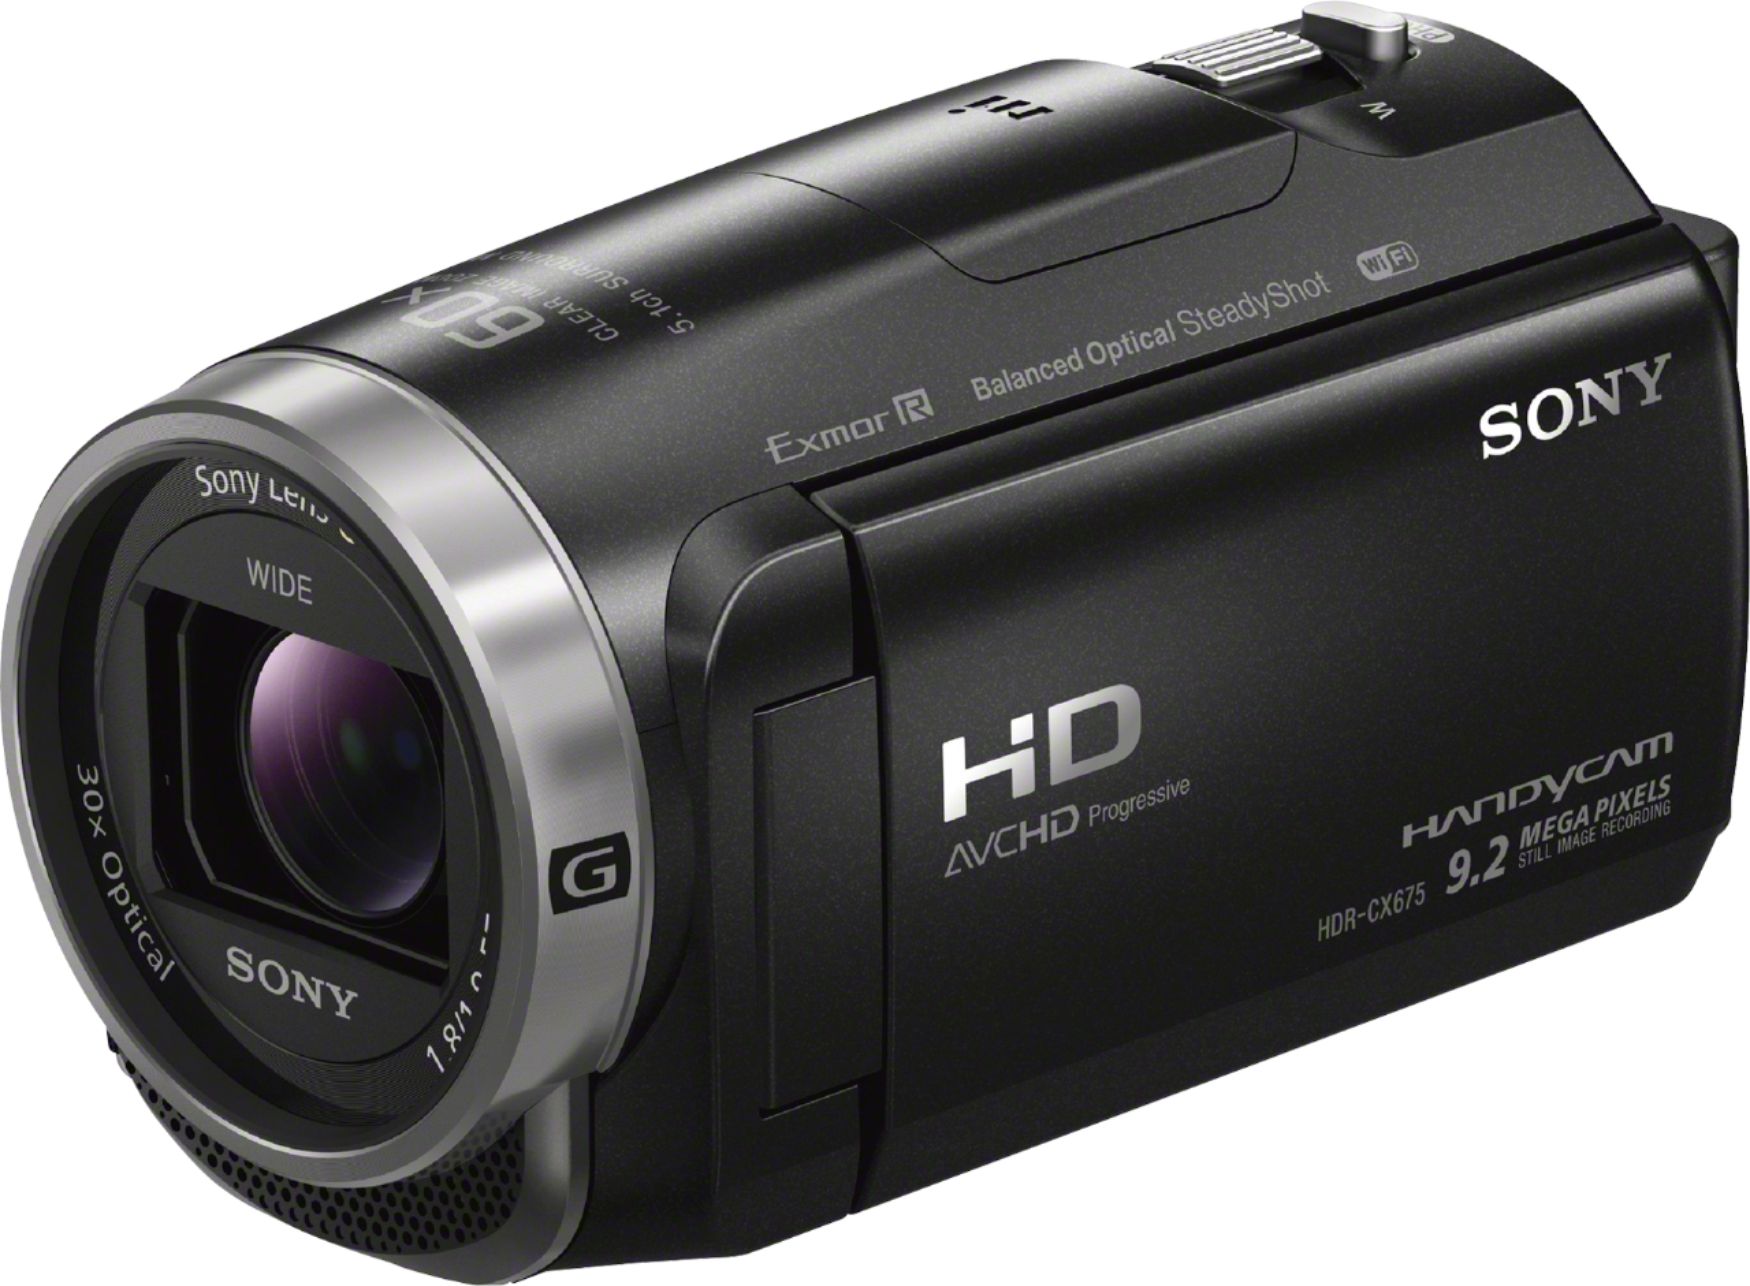 Angle View: Sony - Handycam CX675 32GB Flash Memory Camcorder - Black